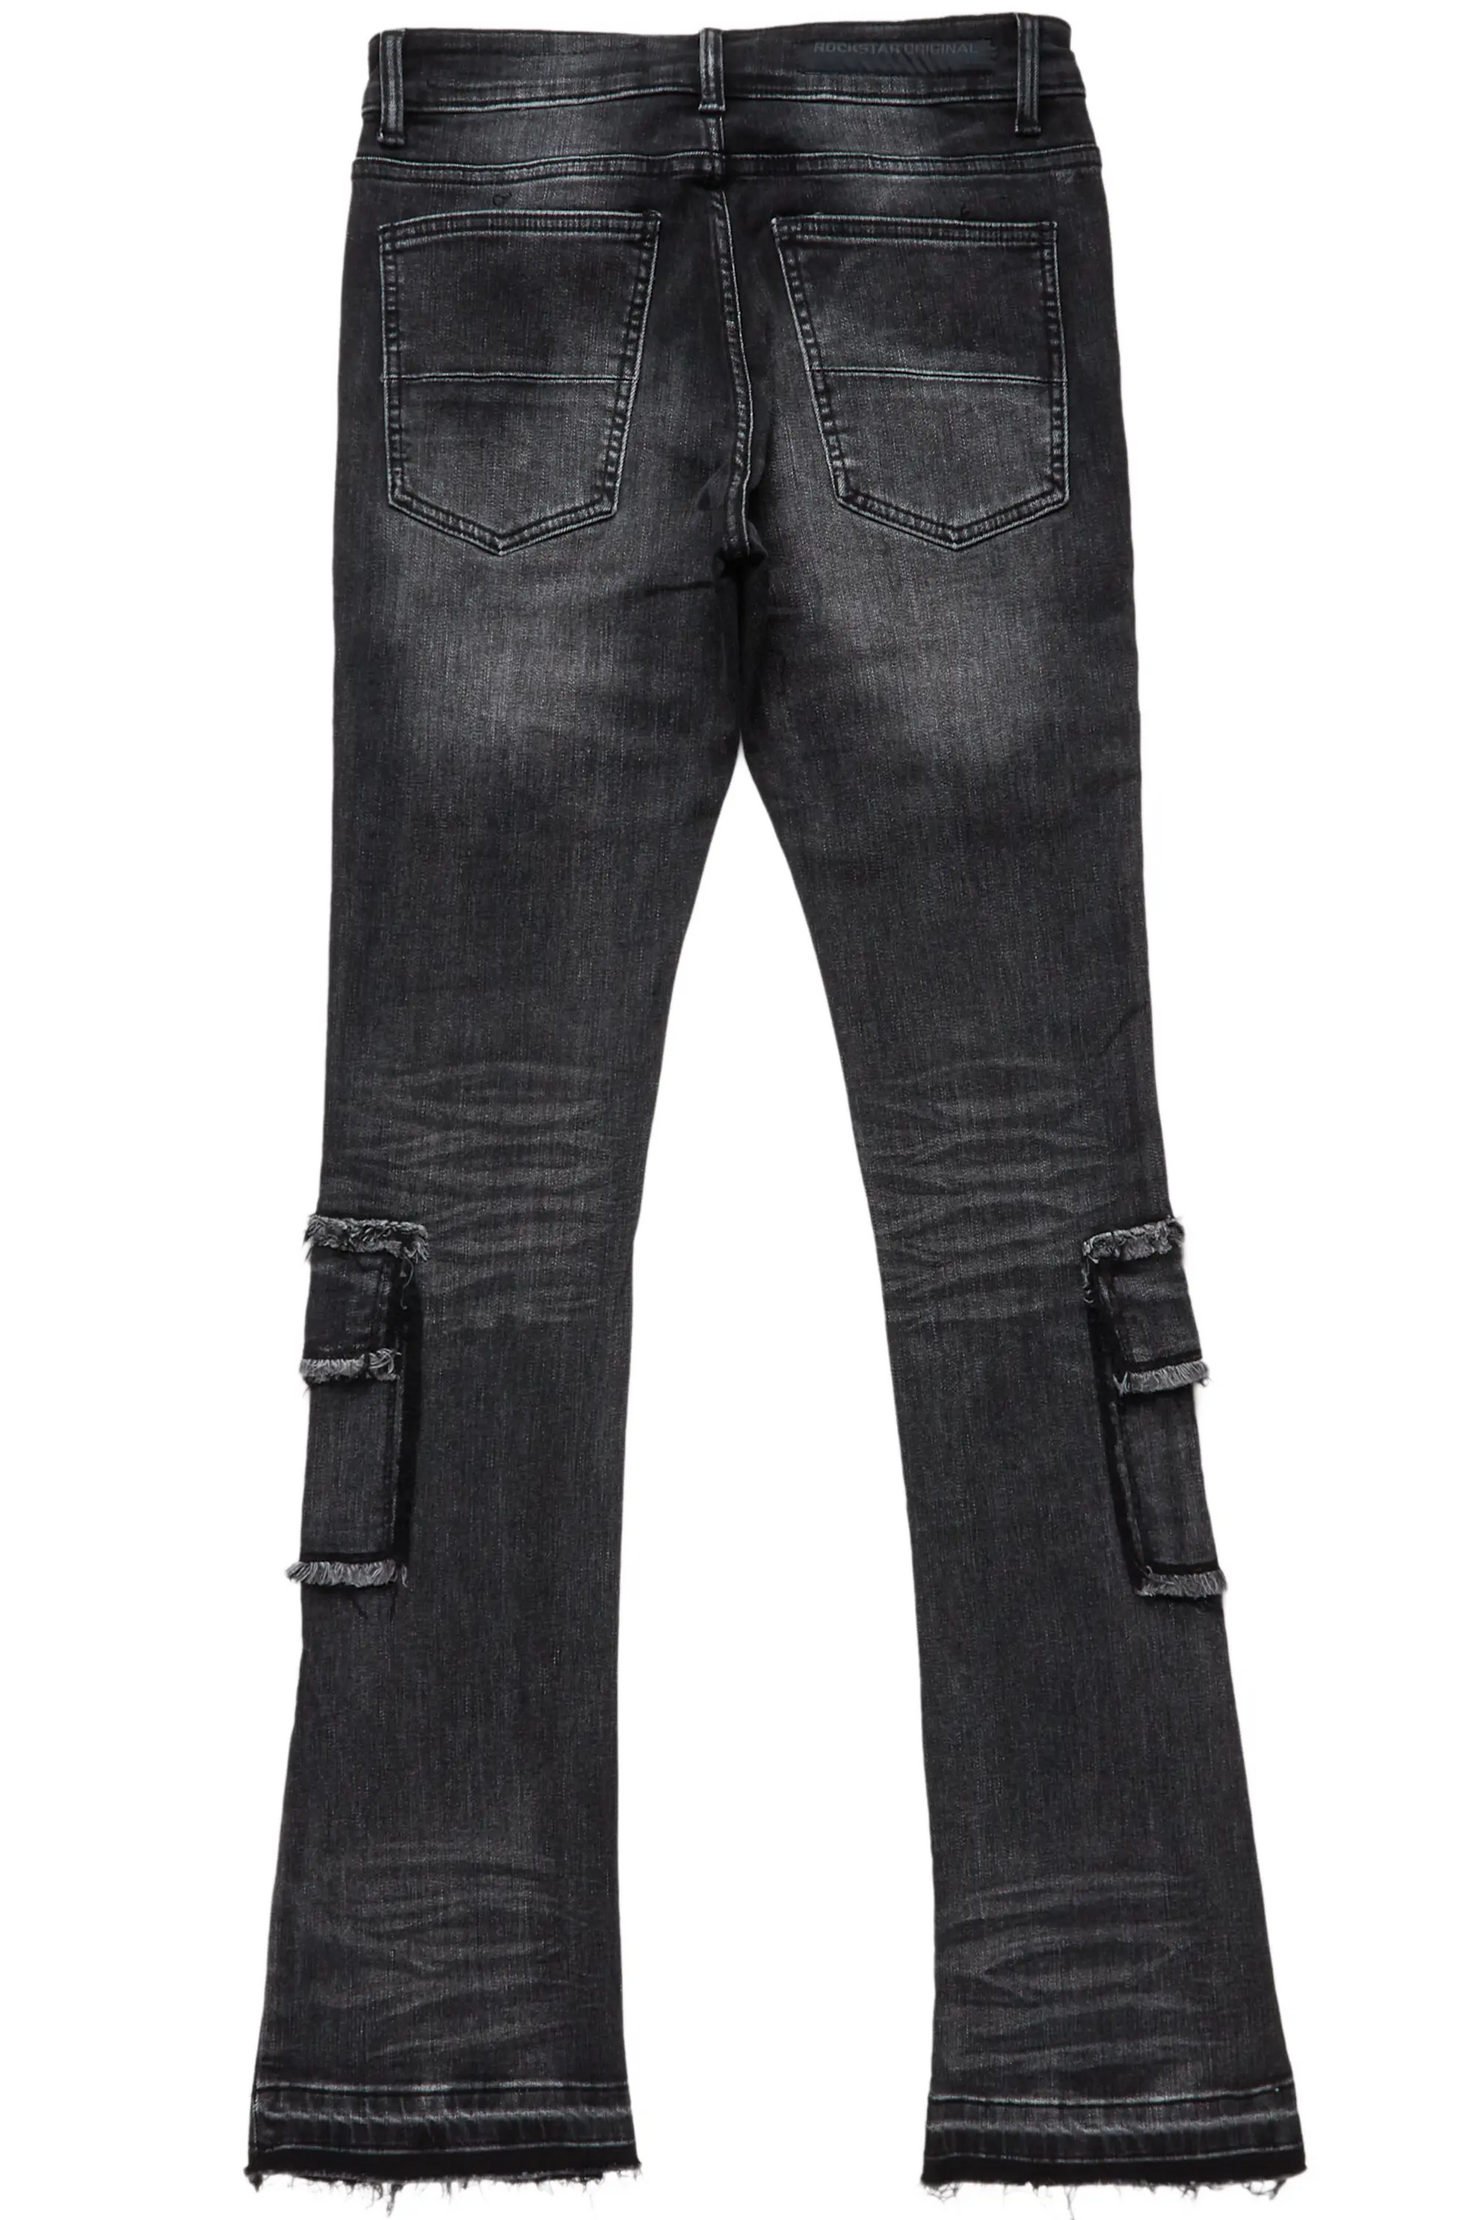 Rockstar Original Jeans Pants Mens Size 40 Ultra Slim Black PATCH